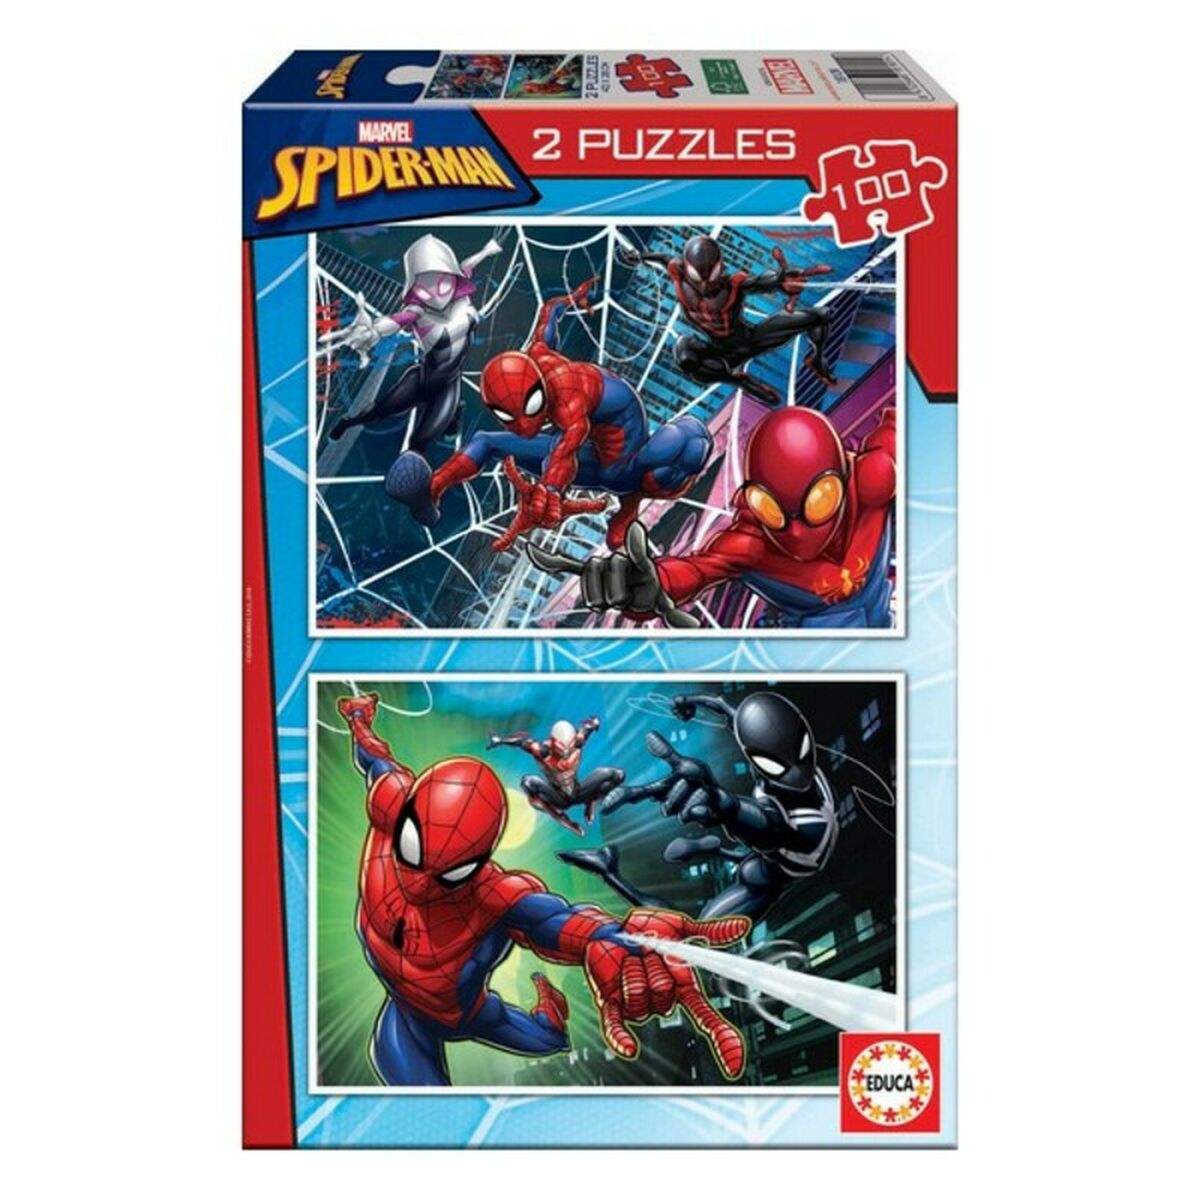 Puzzle Spiderman Educa (100 pcs) - Educa - Jardin D'Eyden - jardindeyden.fr